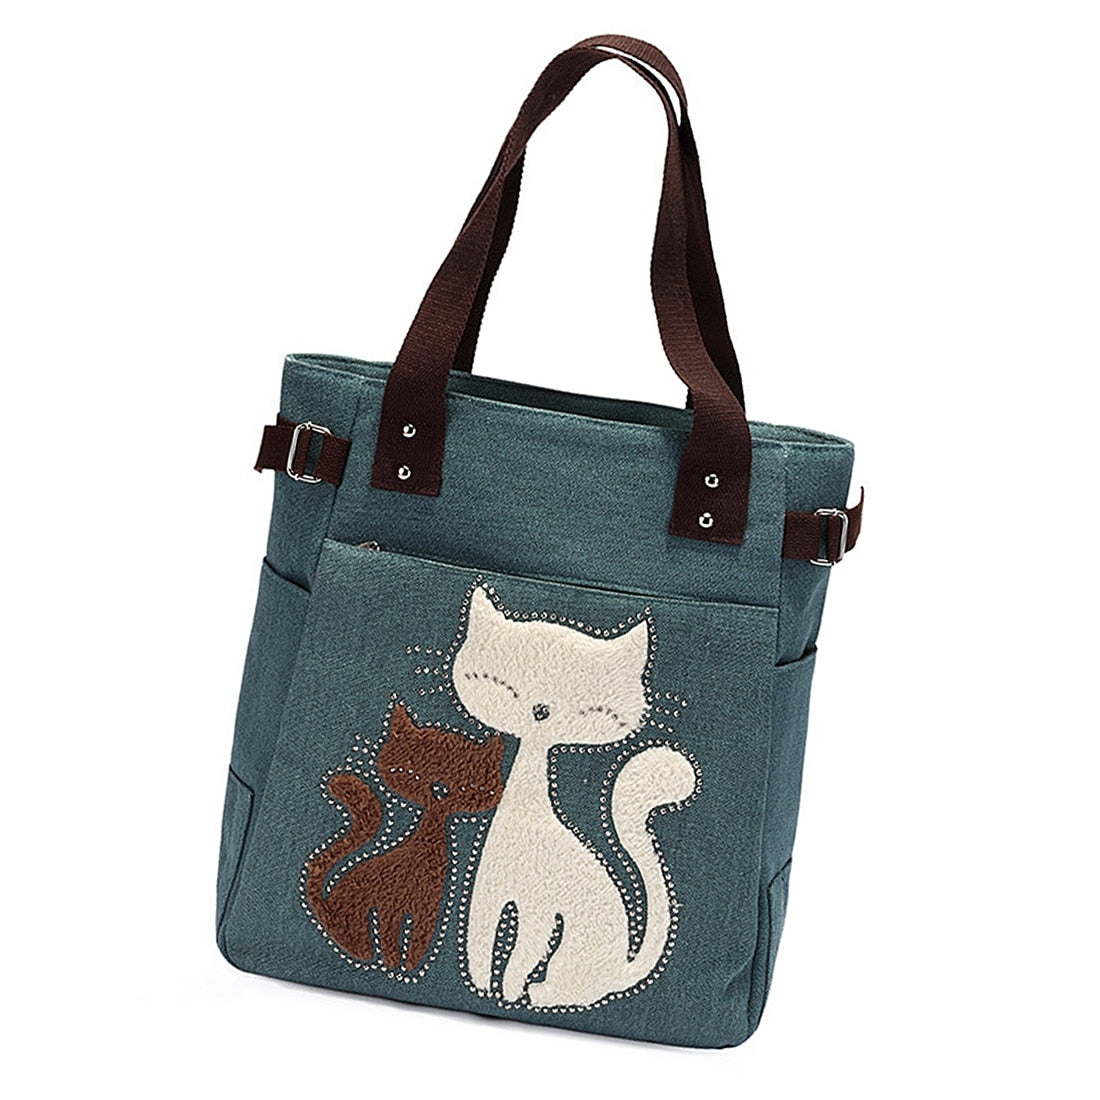 Women's messenger handbag canvas bag with cute cat small shopping shoulder bag Green - ebowsos